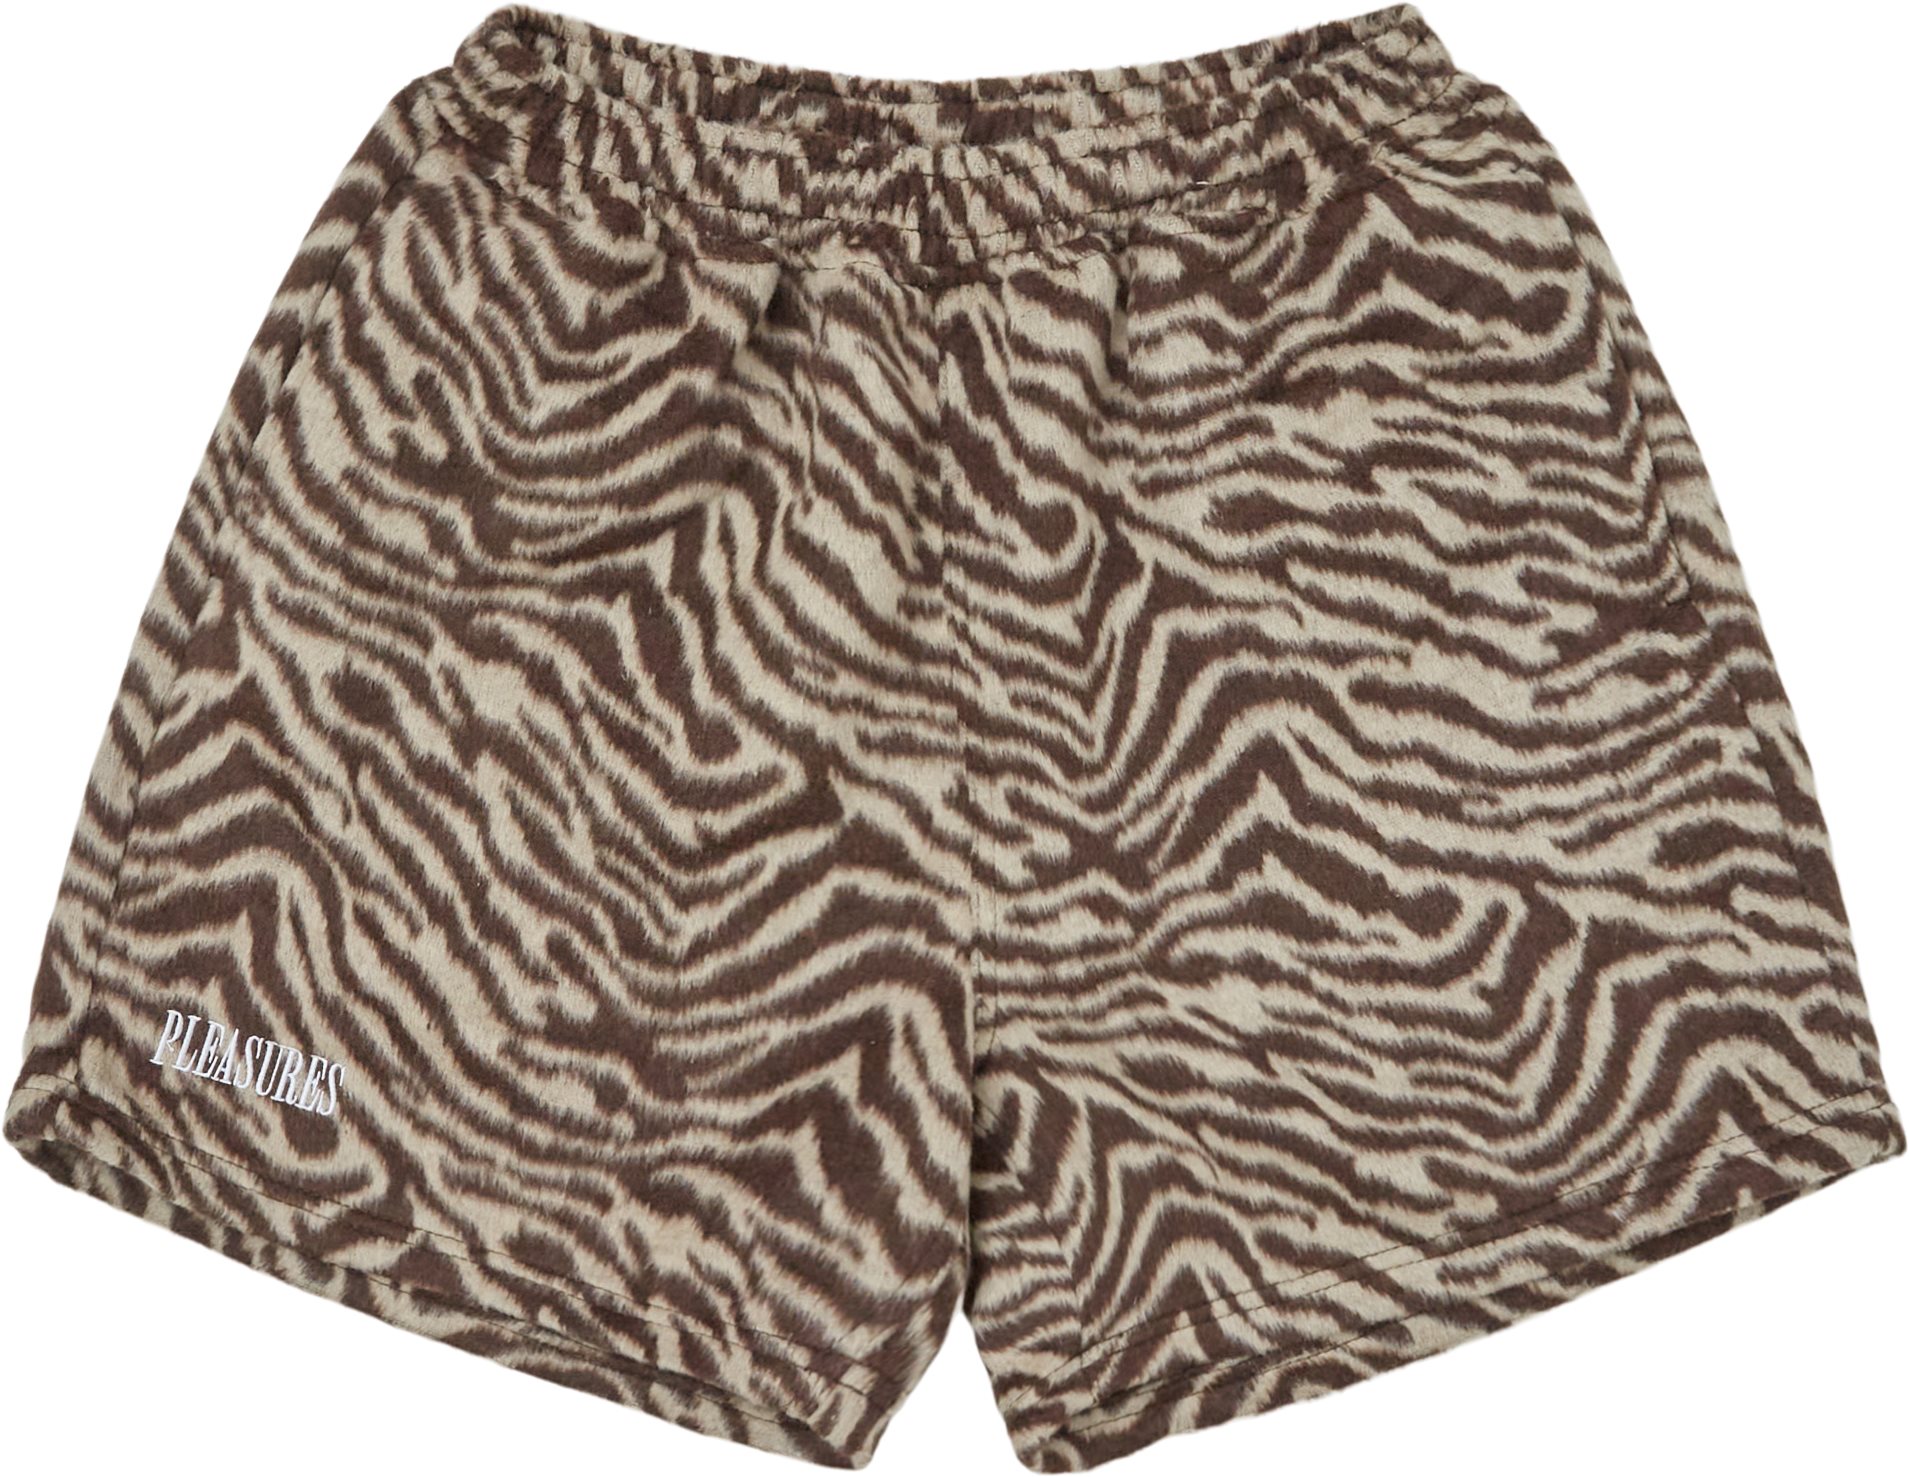 Breaker Fuzzy Stripe Shorts - Shorts - Regular fit - Multi